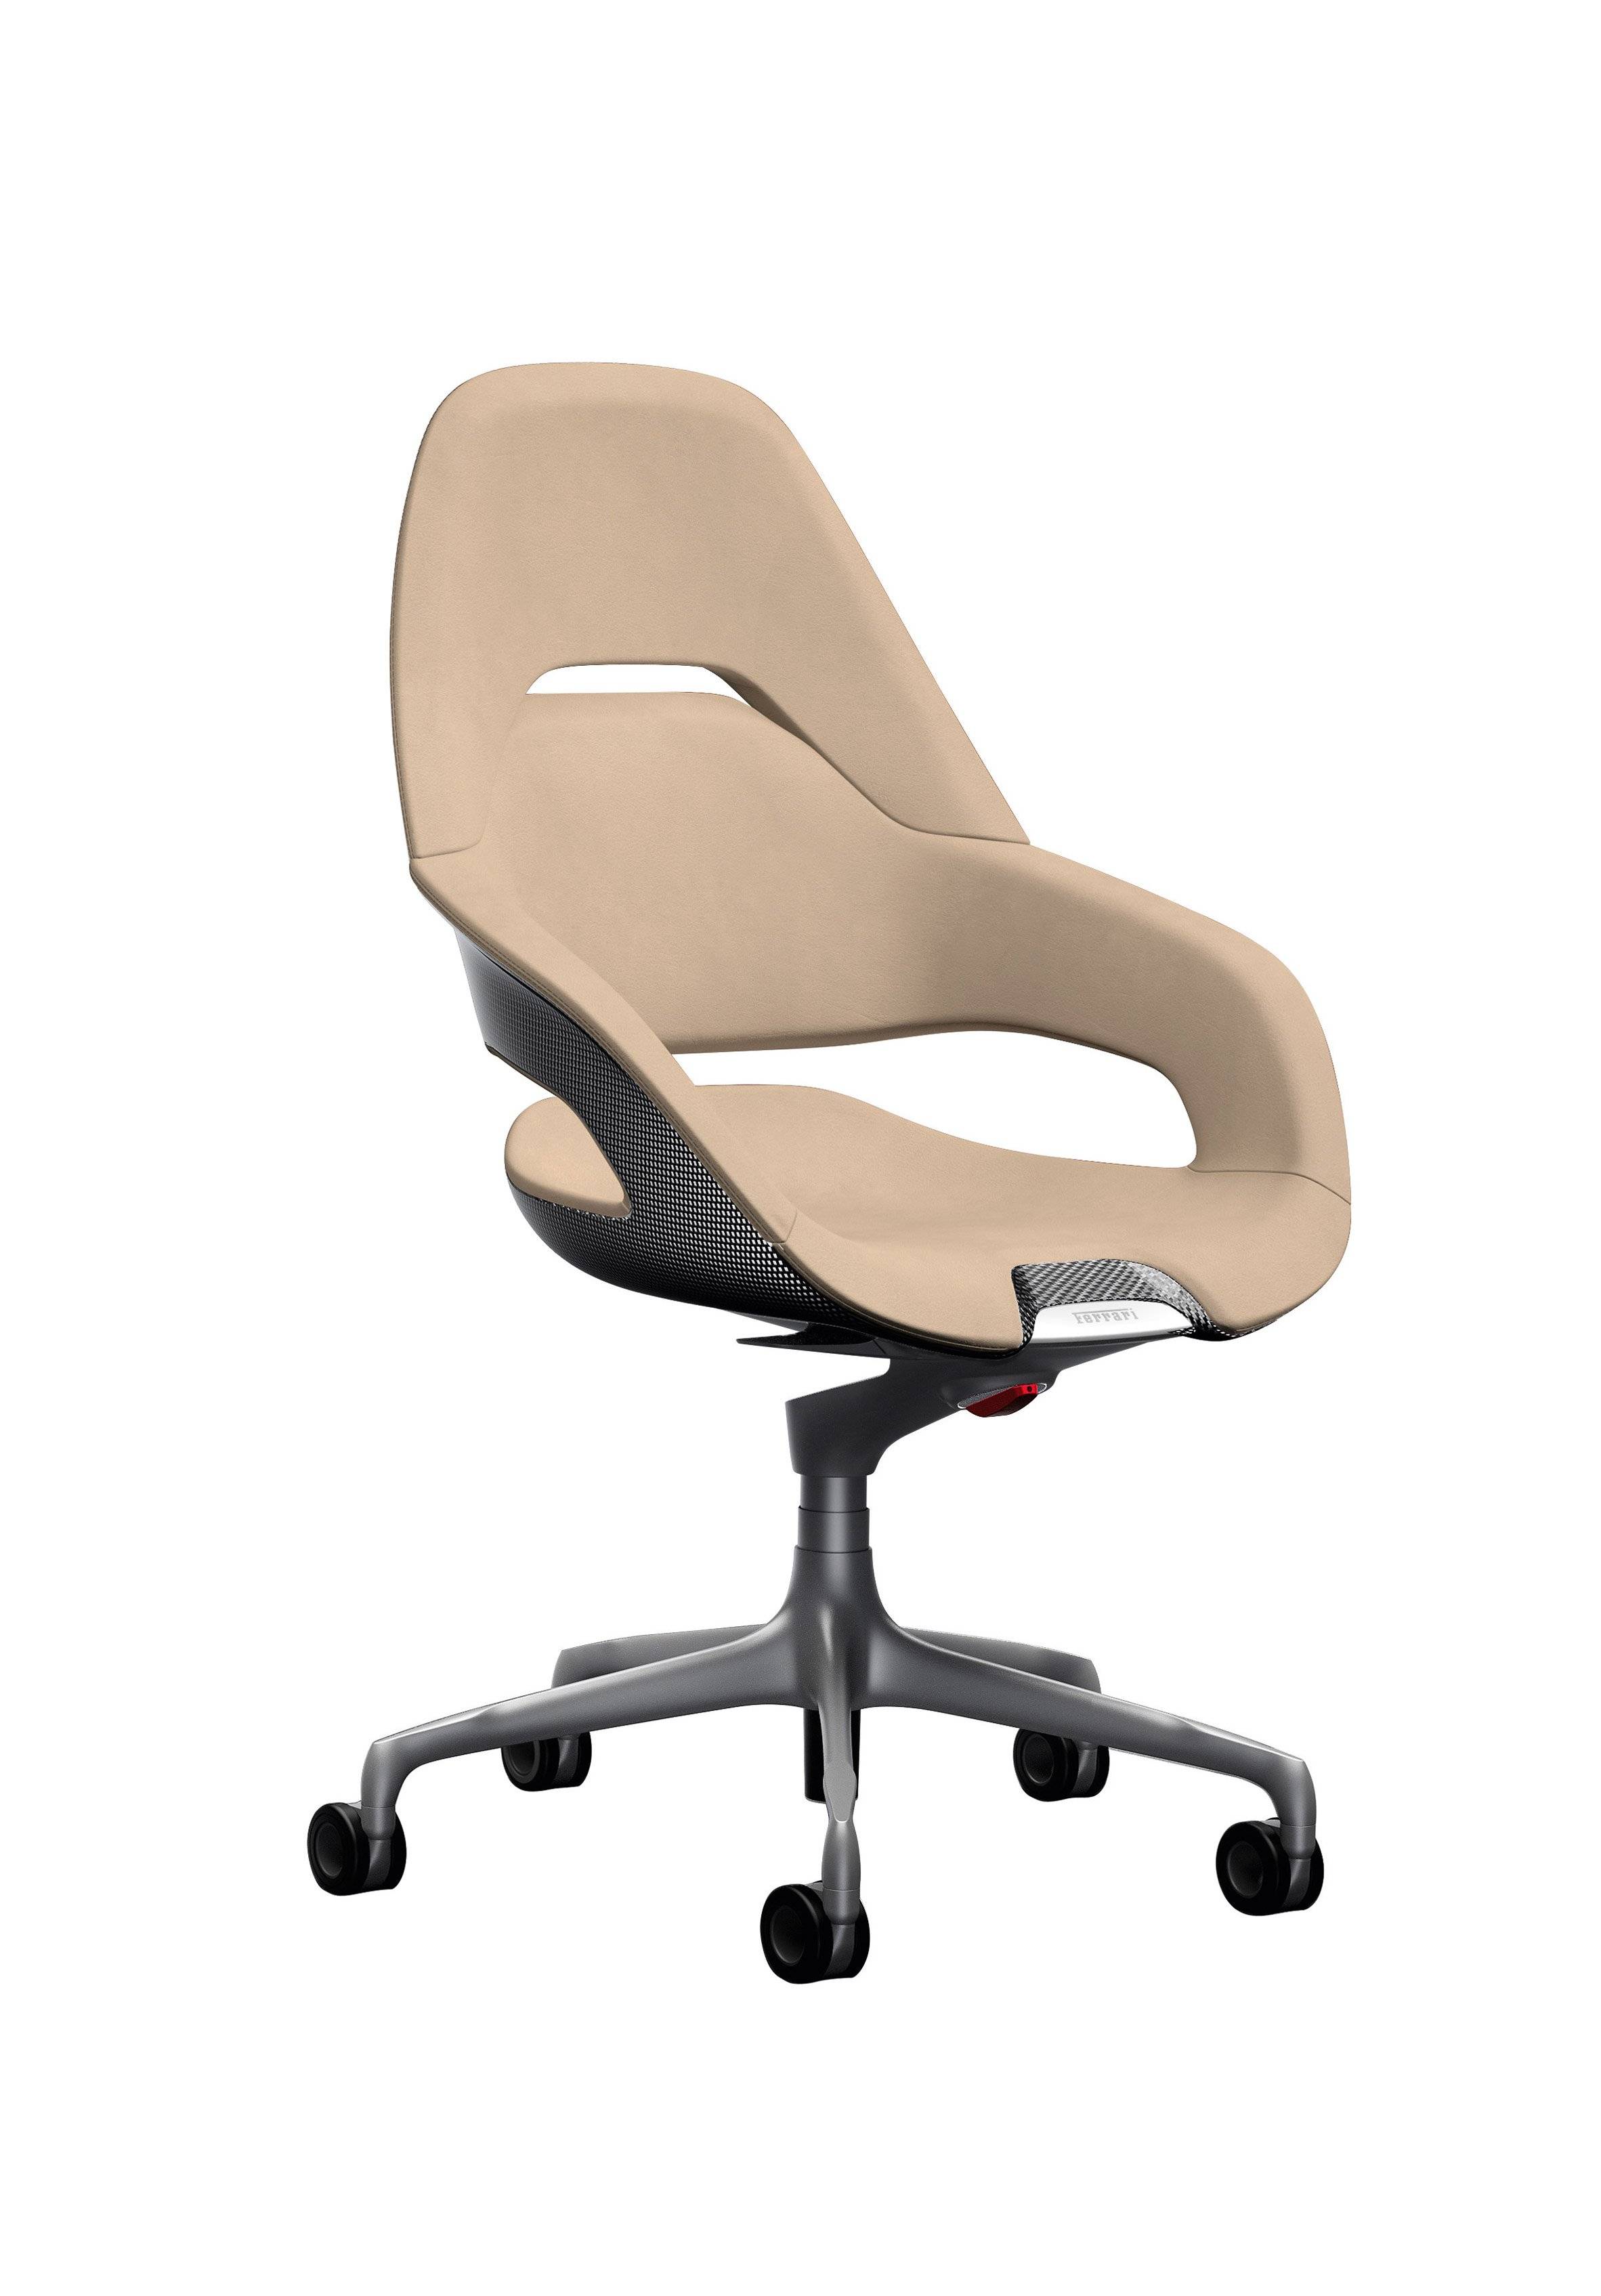 ferrari-poltrona-frau-chair-milan-design-week-furniture_dezeen_2364_col_12